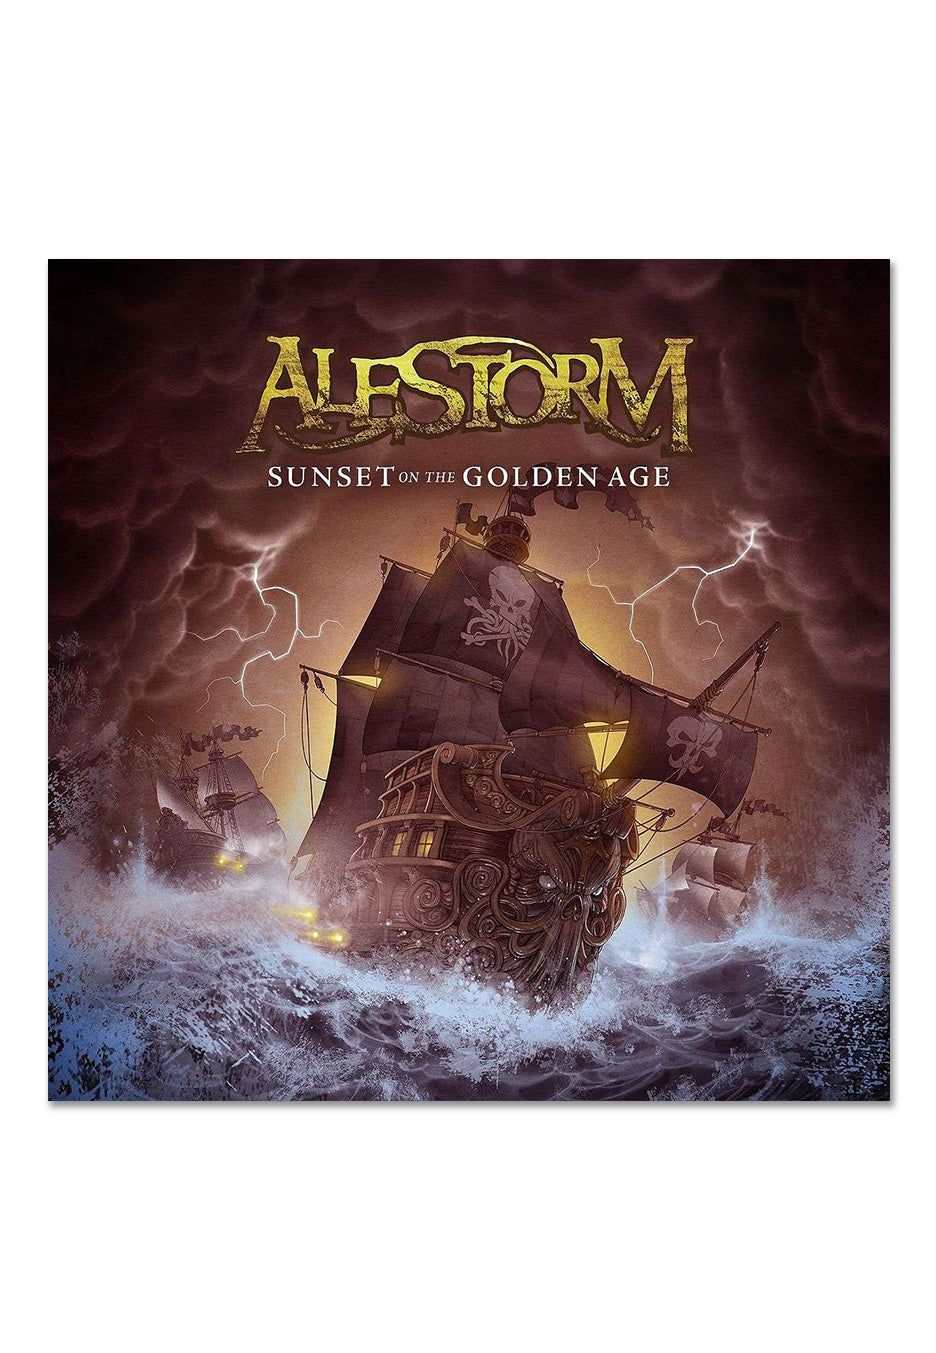 Alestorm - Sunset On The Golden Age - 2 Vinyl